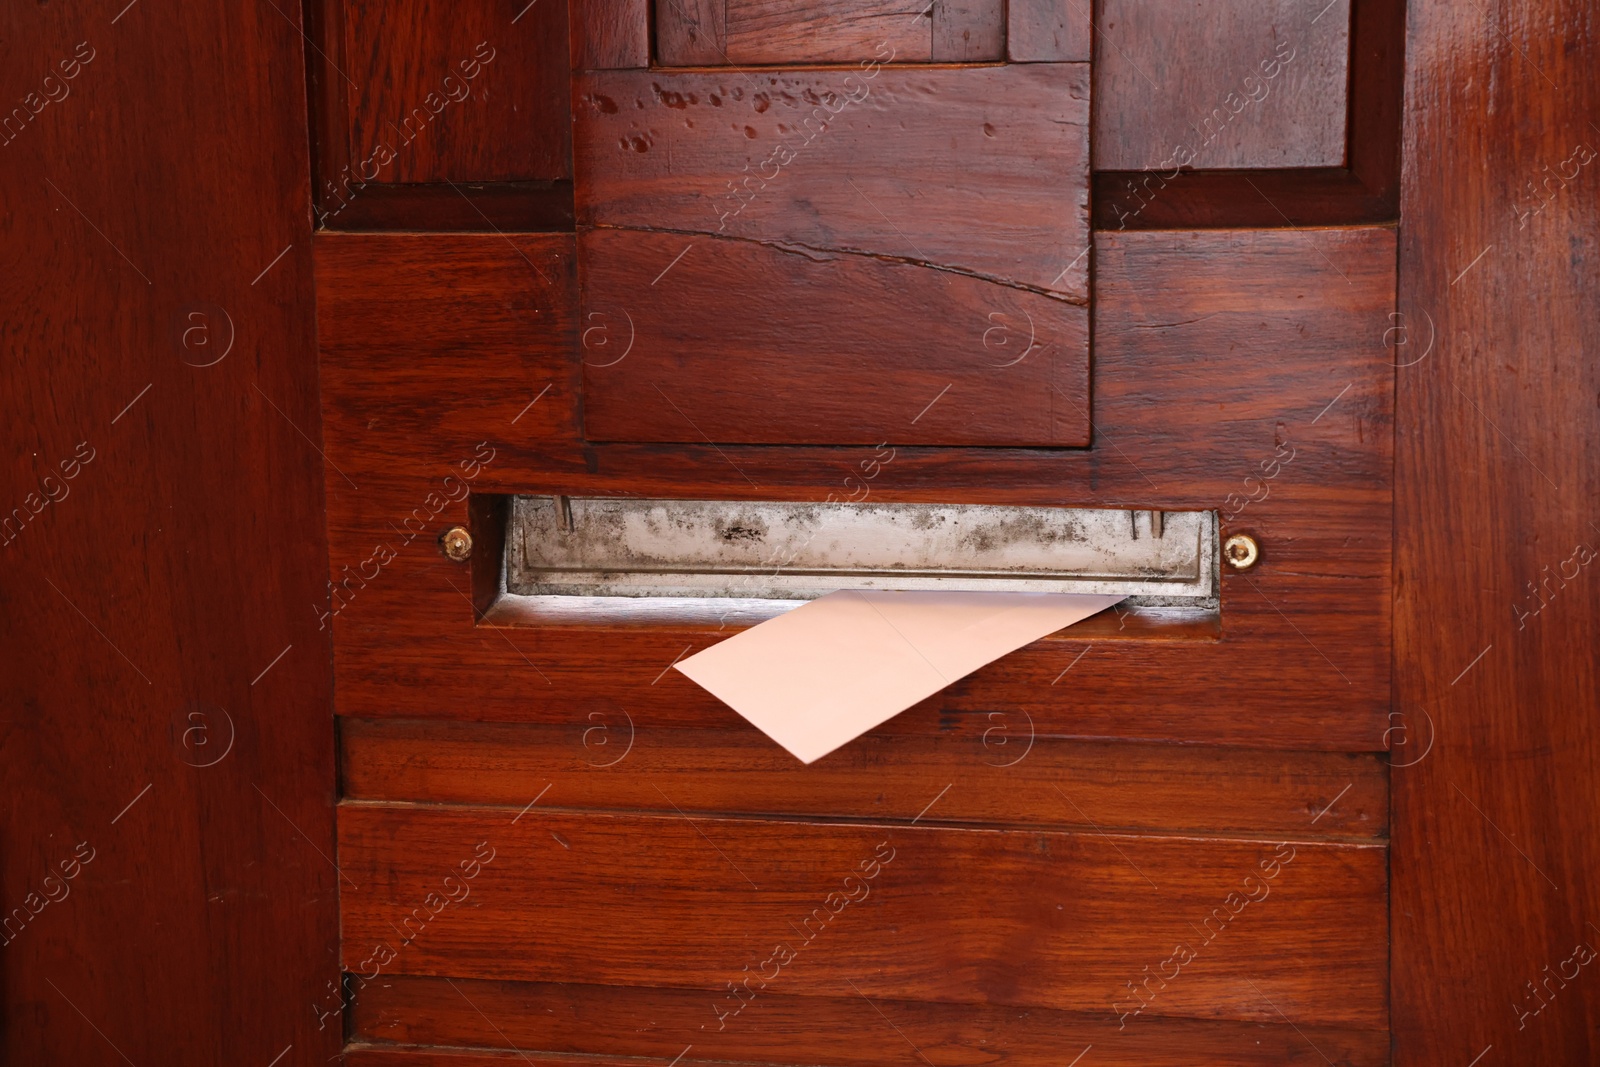 Photo of Mail slot with envelope in wooden door